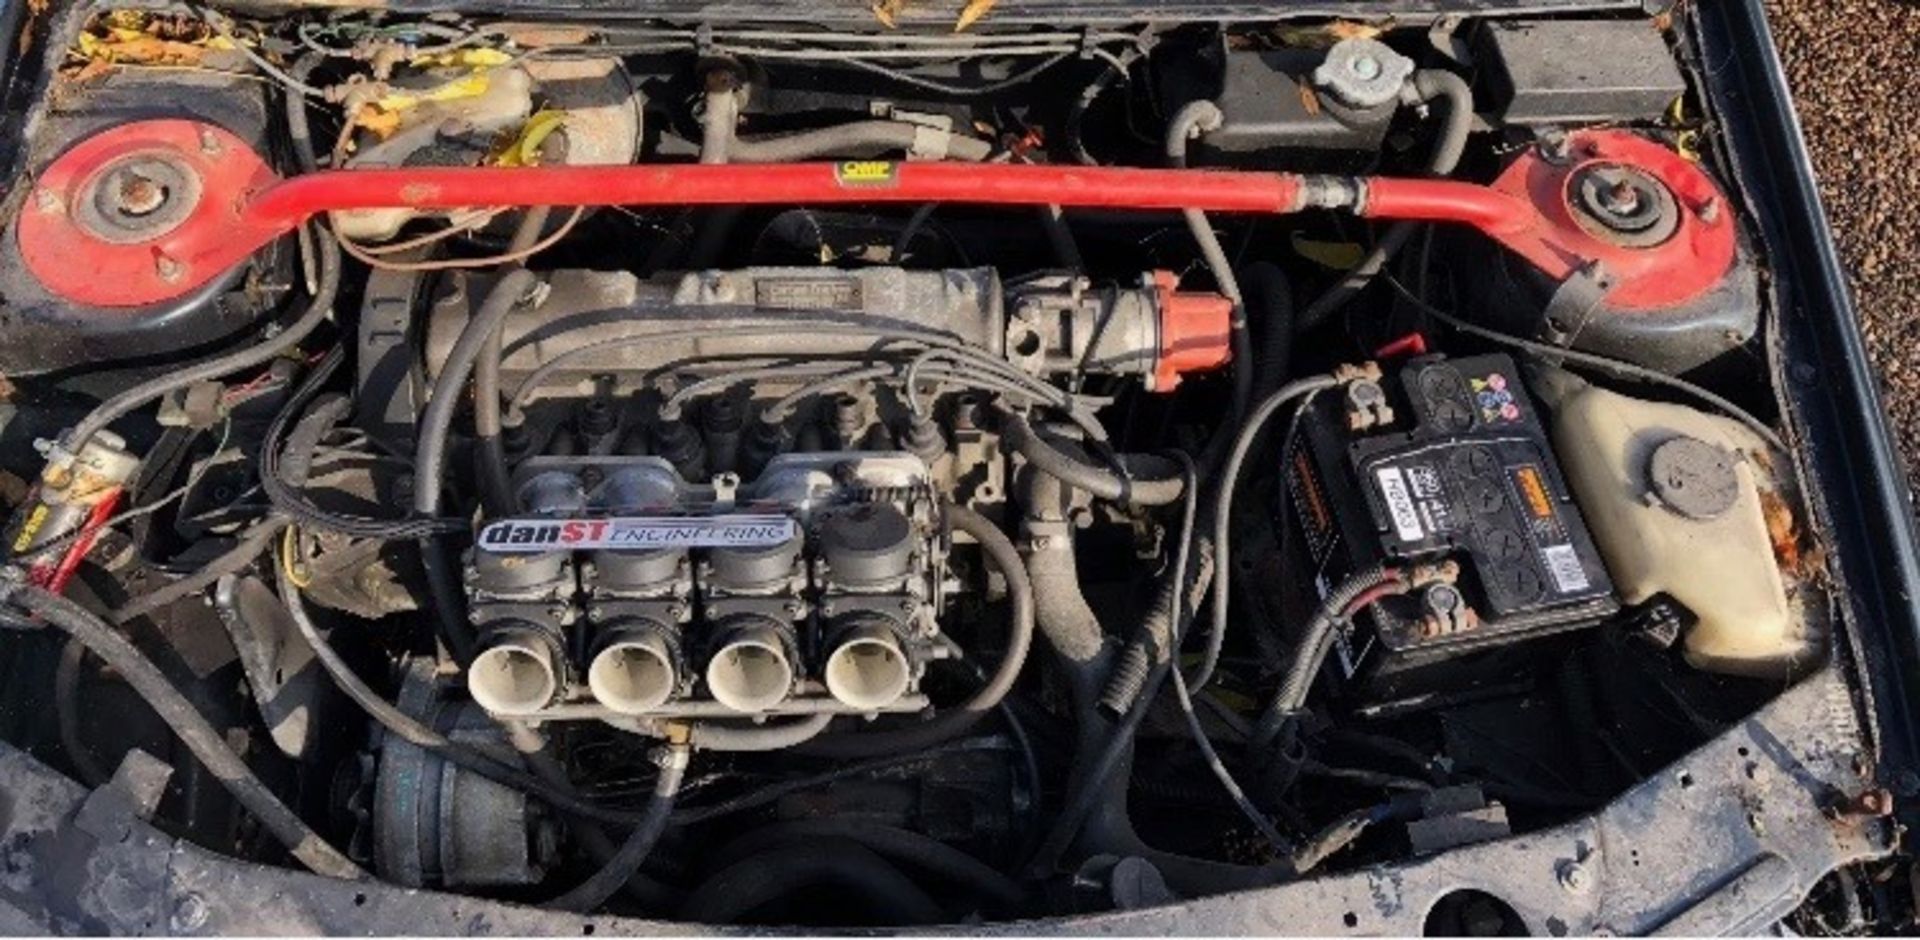 1991/J REG PEUGEOT 205 GTI 1.9 PETROL WITH A FRESH FULL ENGINE REBUILD & RACE READY SETUP! *NO VAT* - Image 8 of 11